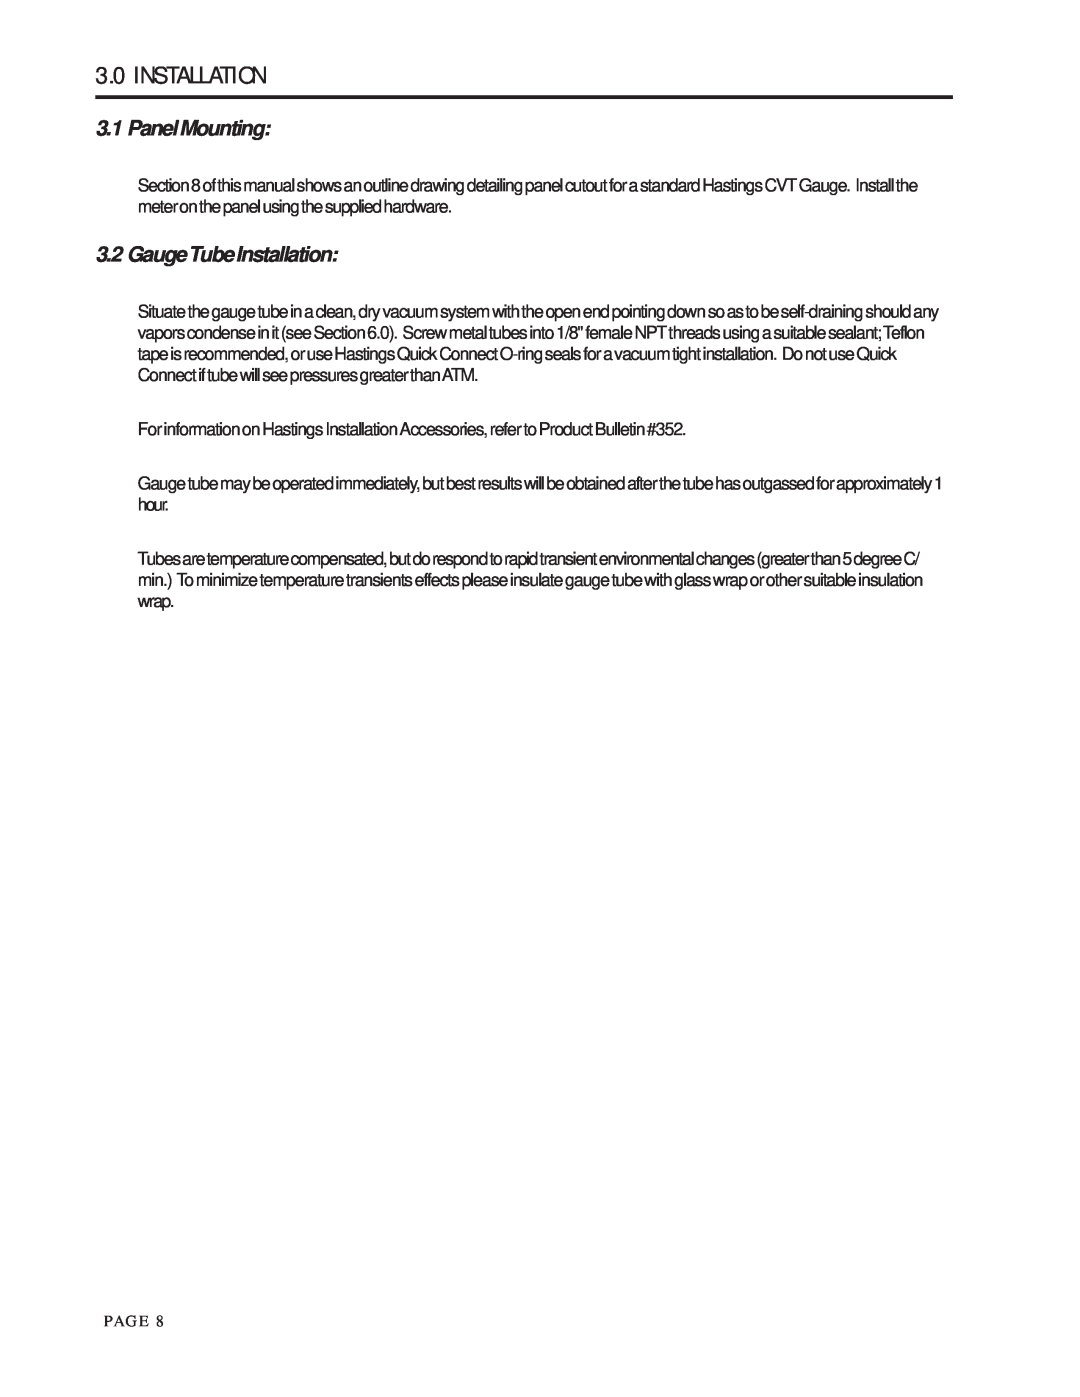 Teledyne HVC-282 instruction manual 3.0INSTALLATION, 3.1PanelMounting, GaugeTubeInstallation 